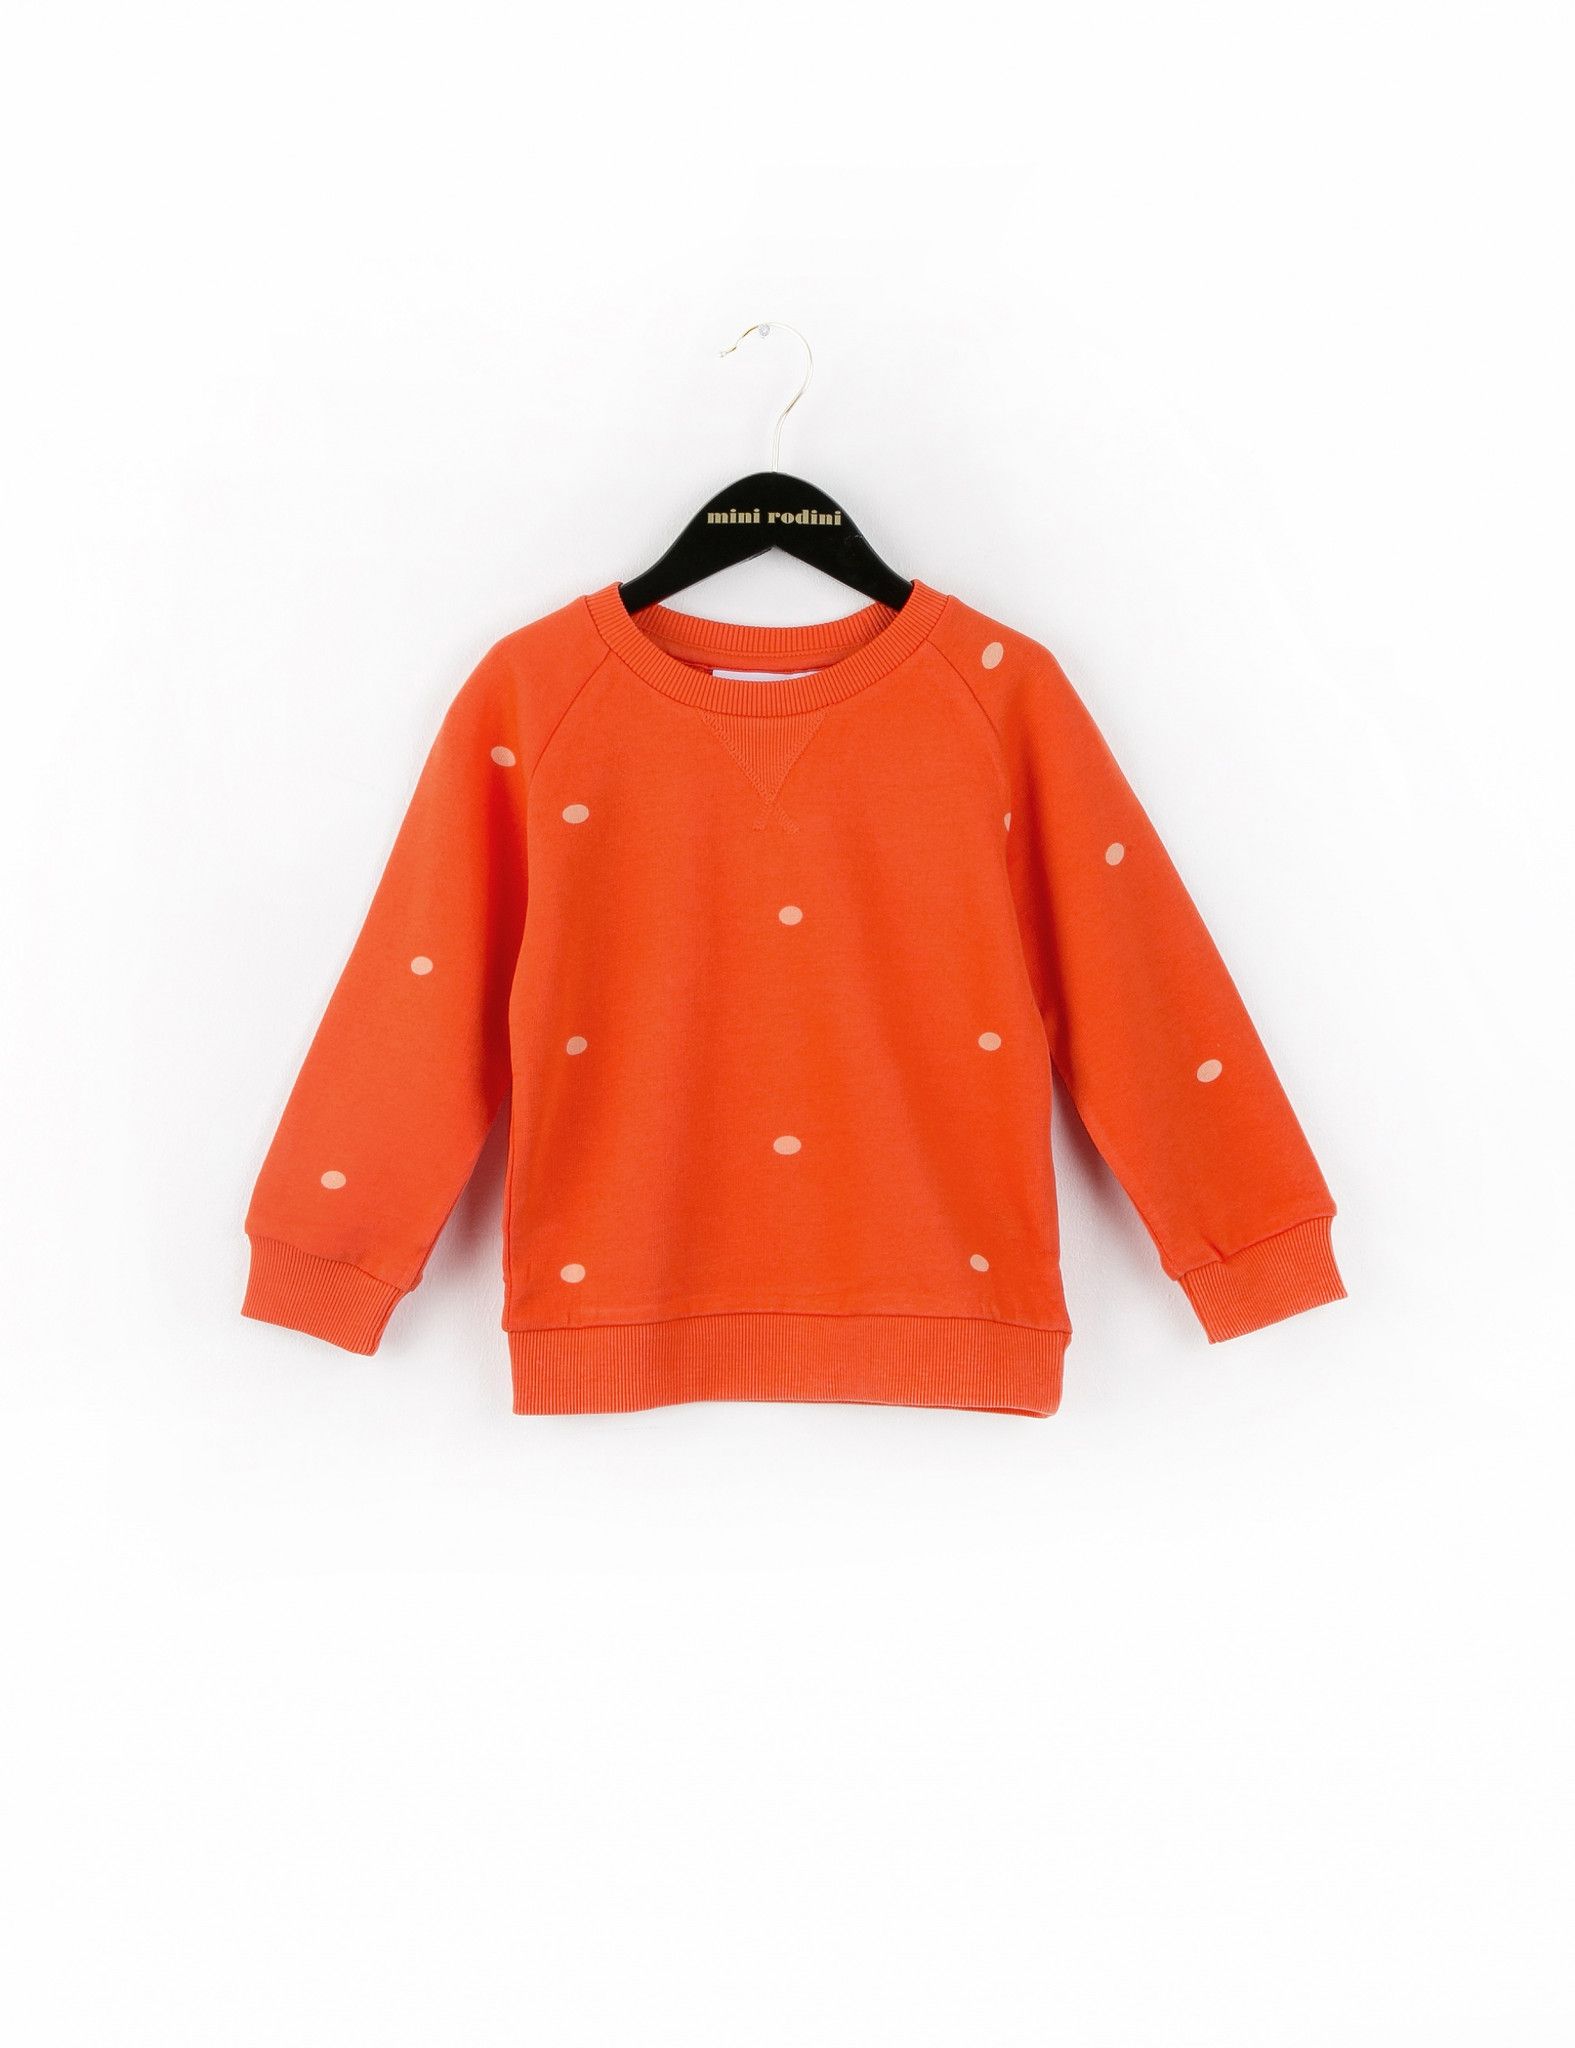 Big Dots Red Sweatshirt - CÉMAROSE | Children's Fashion Store - 1